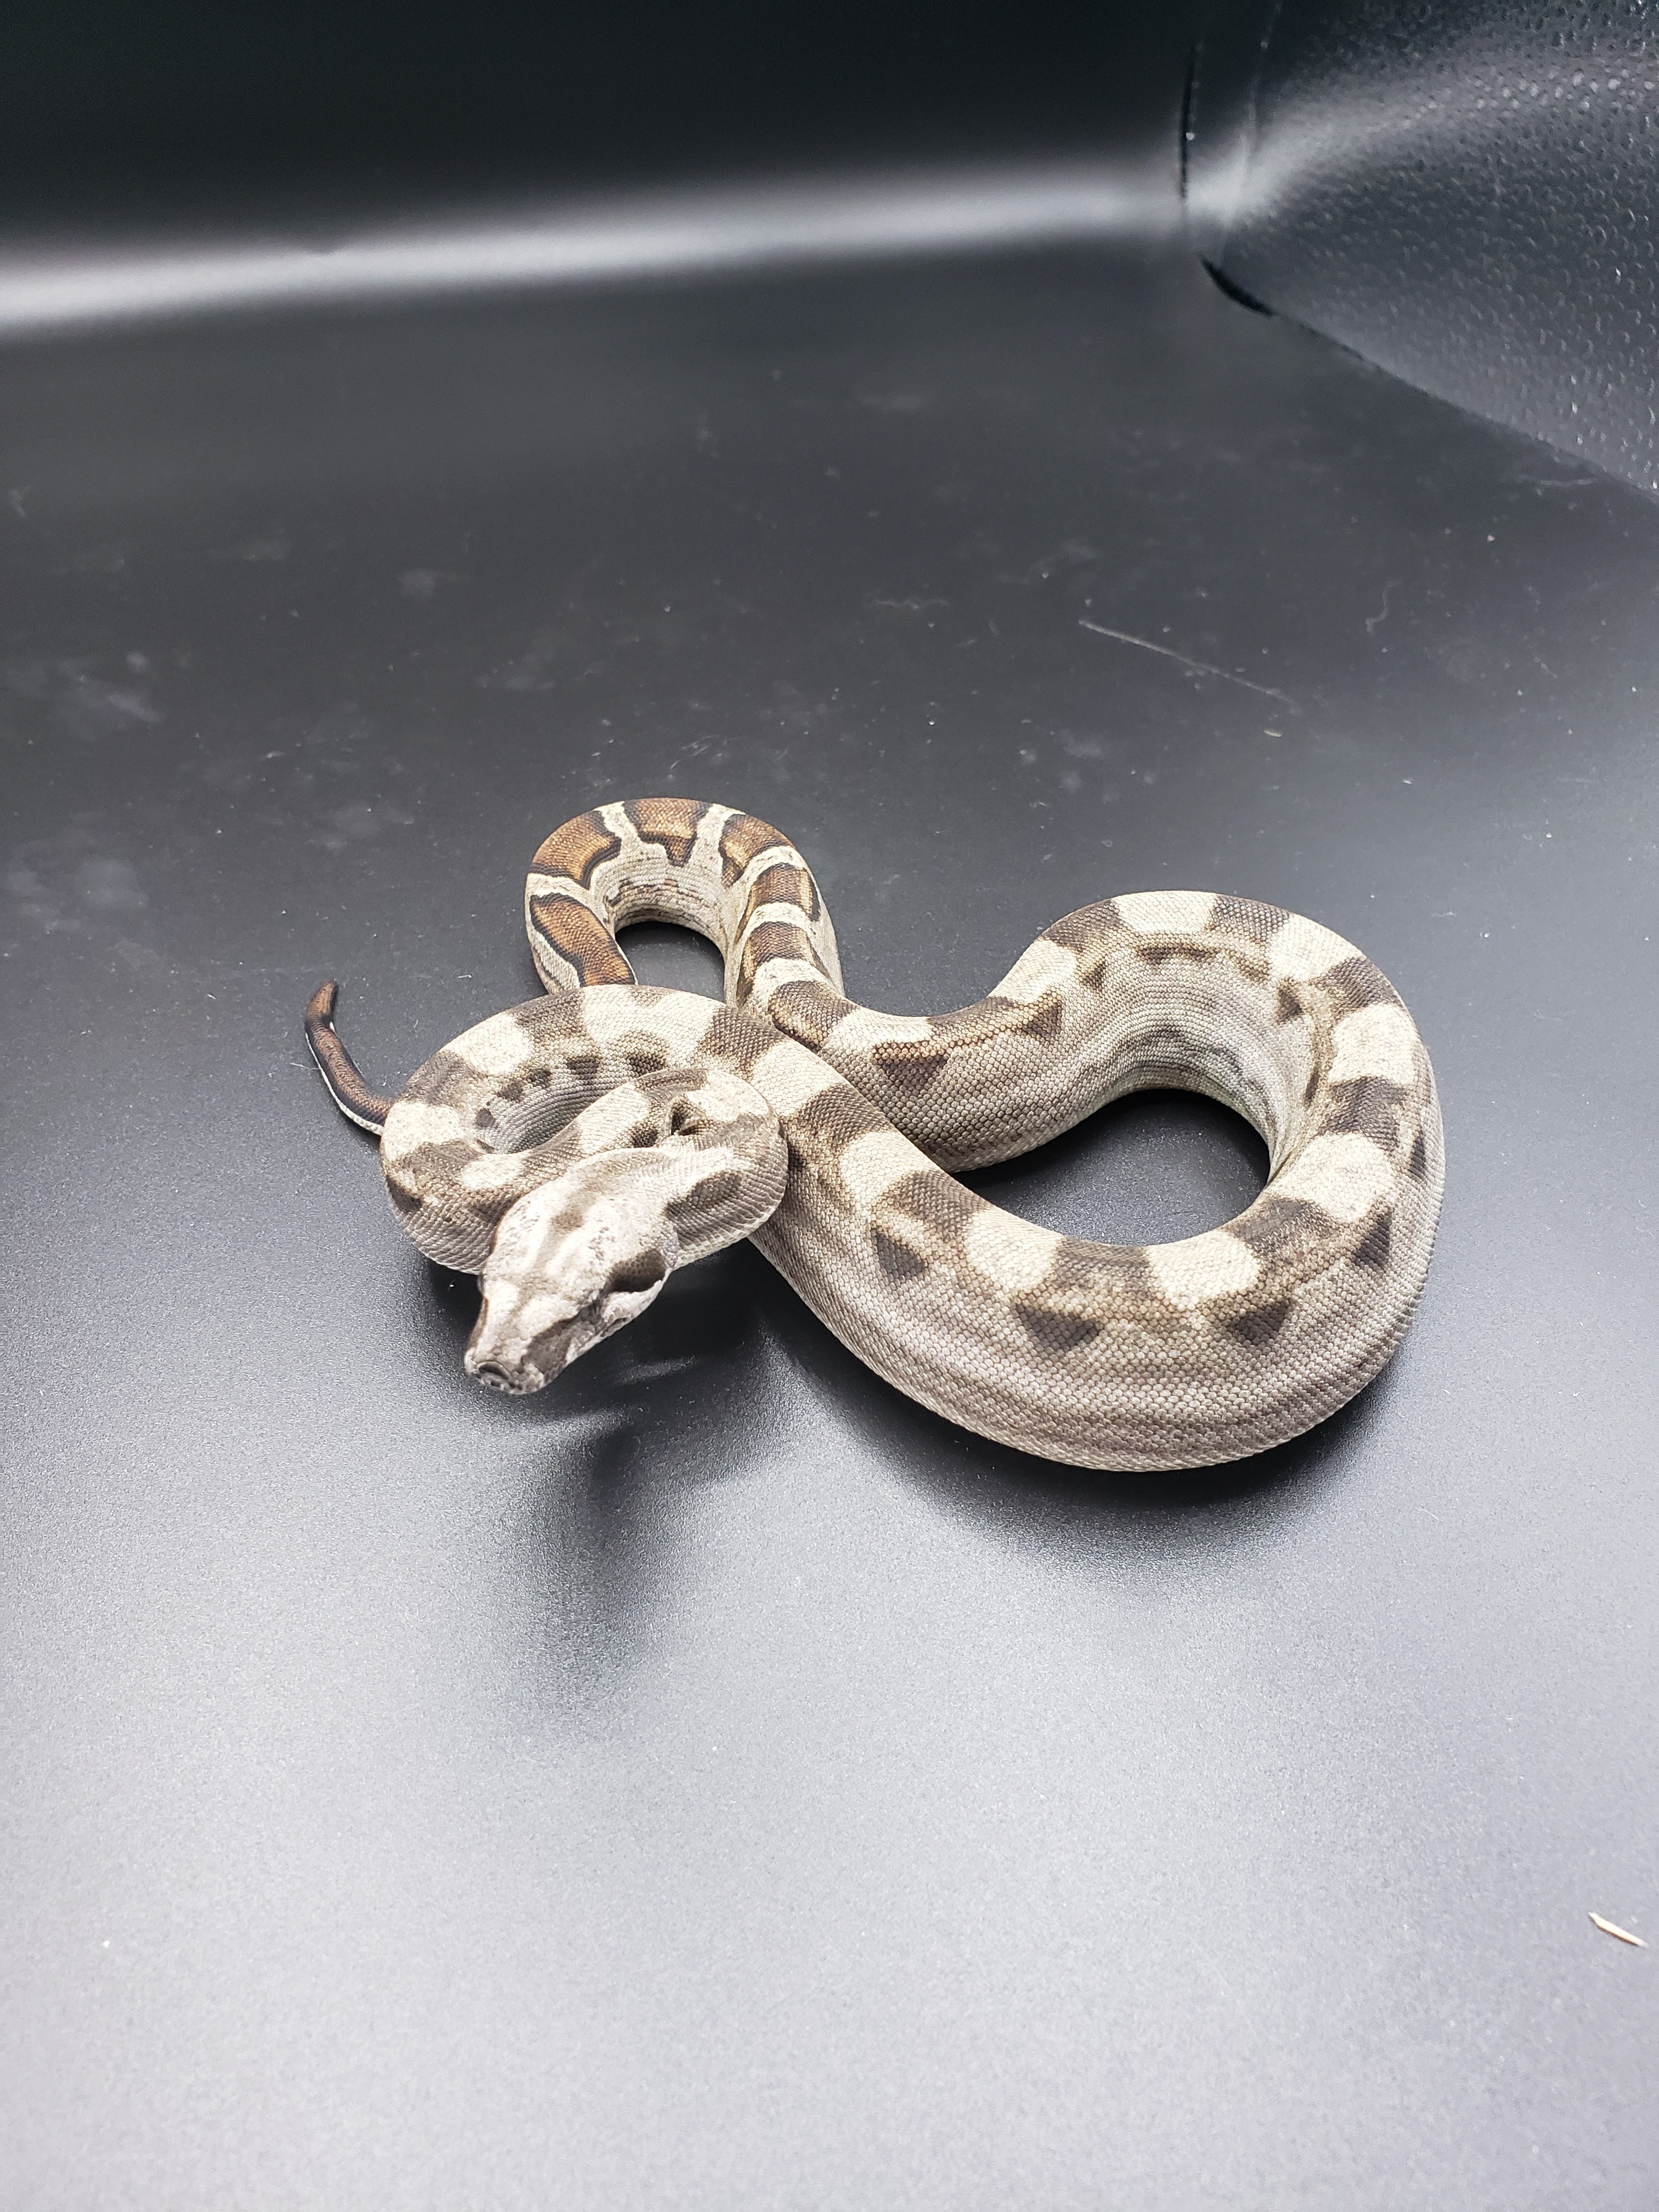 Motley Boa Constrictor by Hobo's Snakes